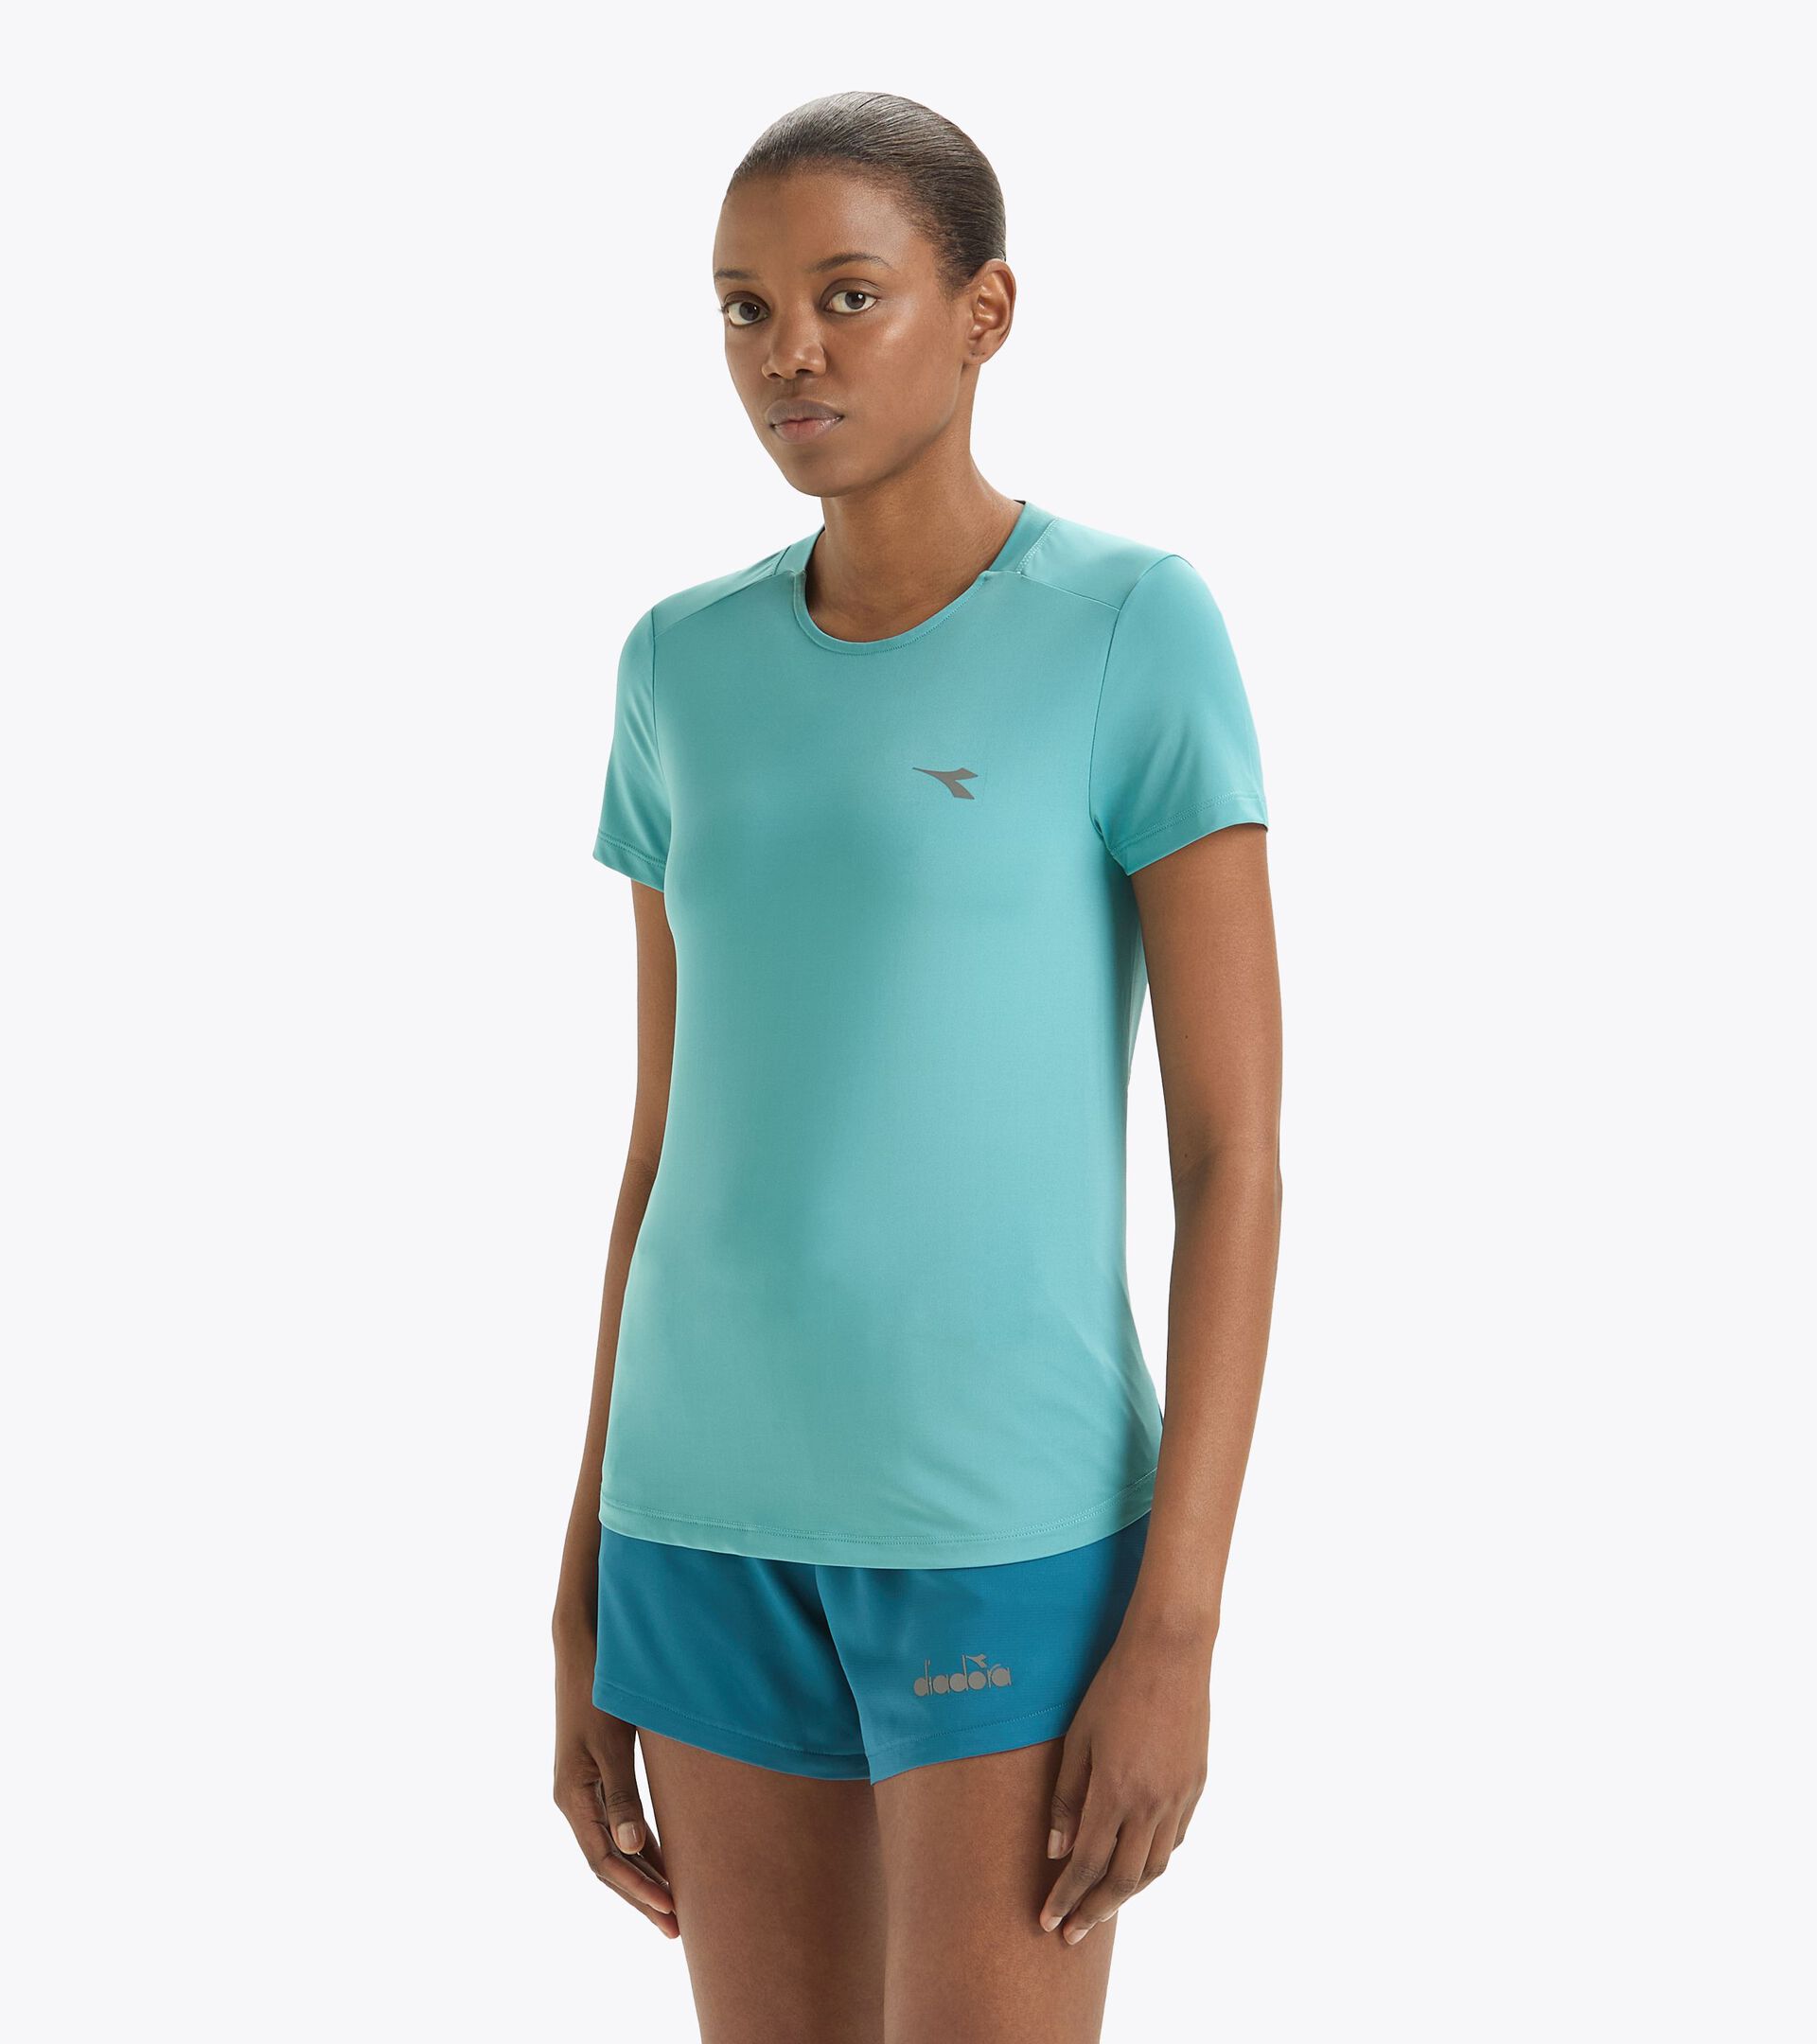 Camiseta de running - Tejido ligero - Mujer
 L. SUPER LIGHT SS T-SHIRT DUSTY TURQUOISE - Diadora